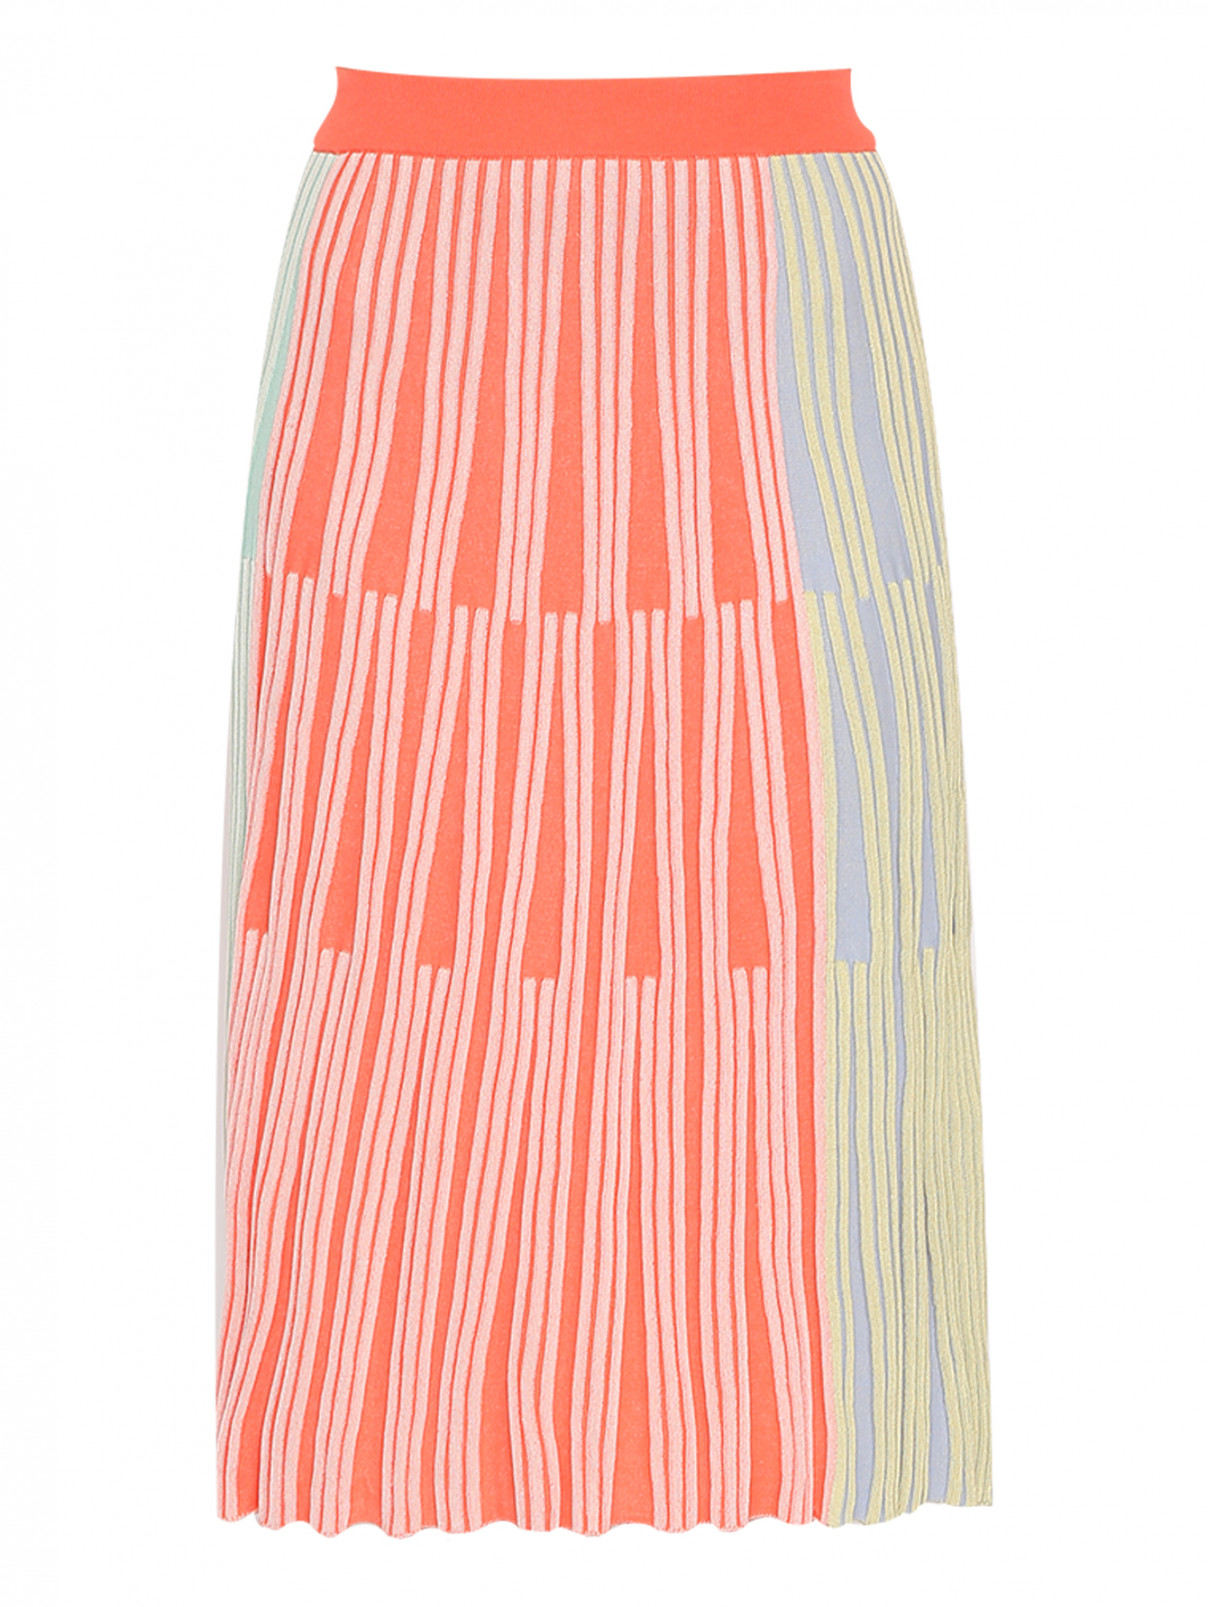 Трикотажная юбка-миди Kenzo  –  Общий вид  – Цвет:  Мультиколор